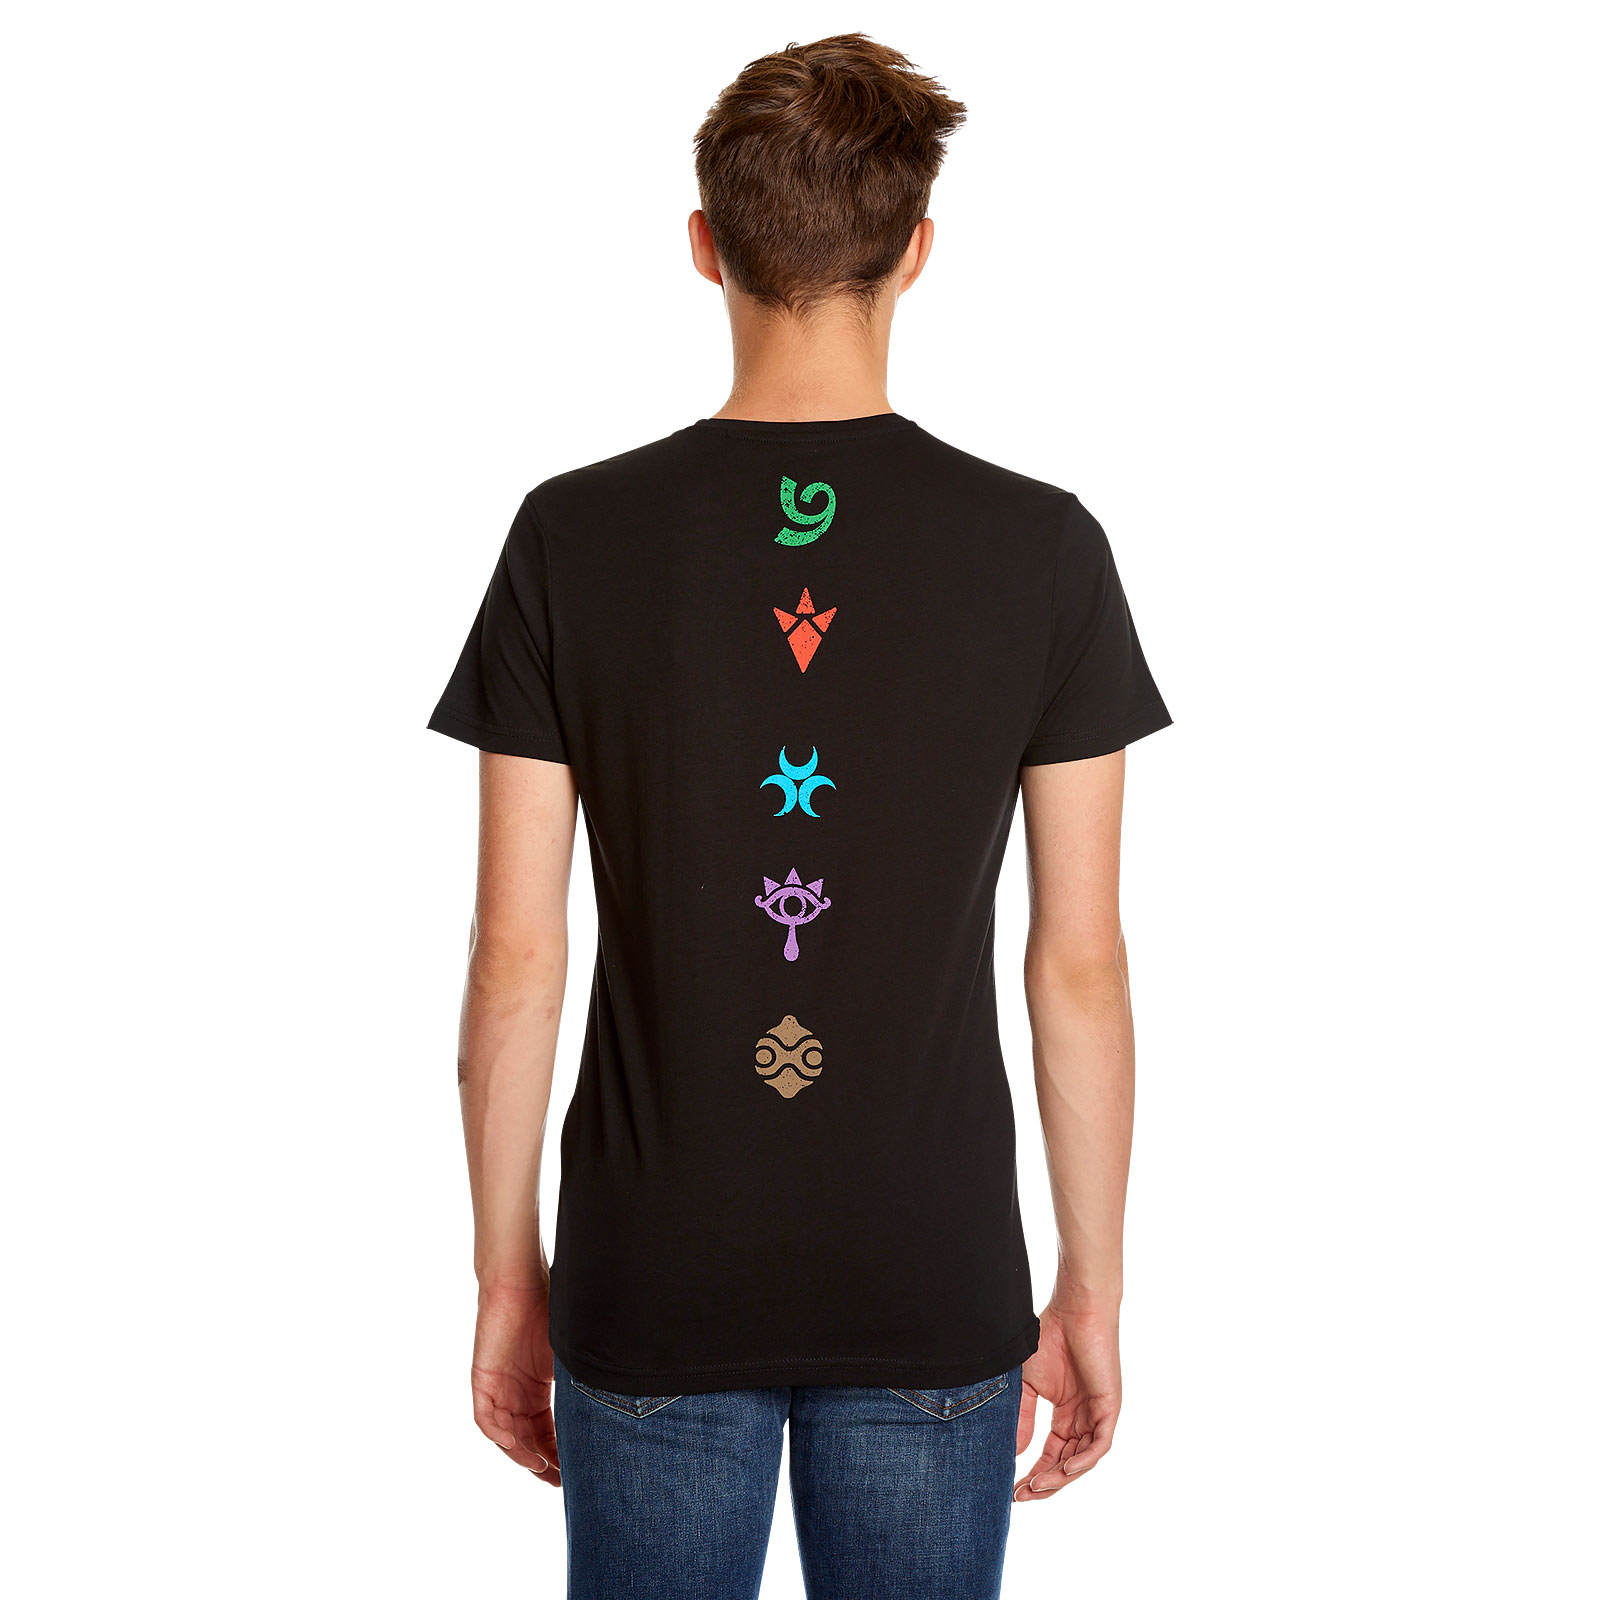 Zelda - Peoples of Hyrule T-Shirt black